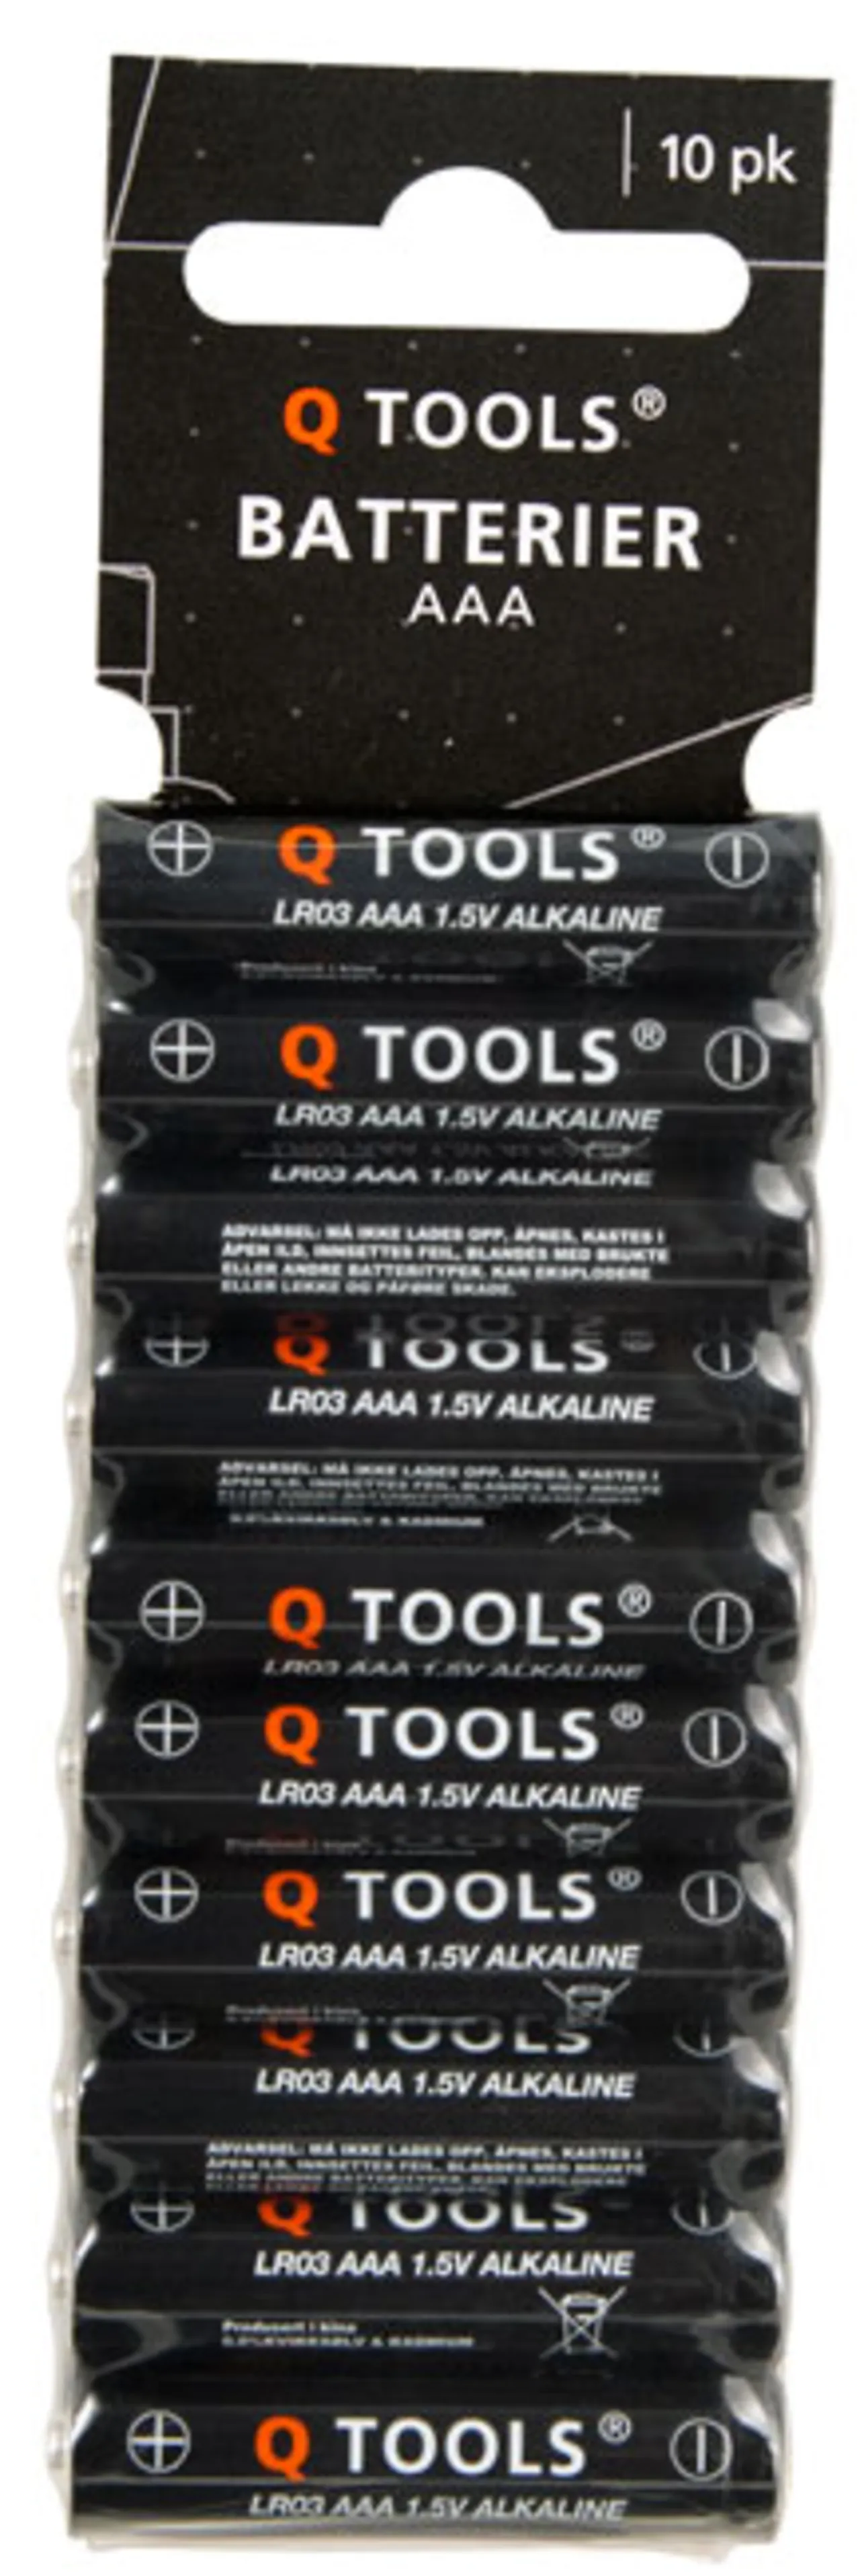 Q-tools batterier aaa pakke á 10 stk